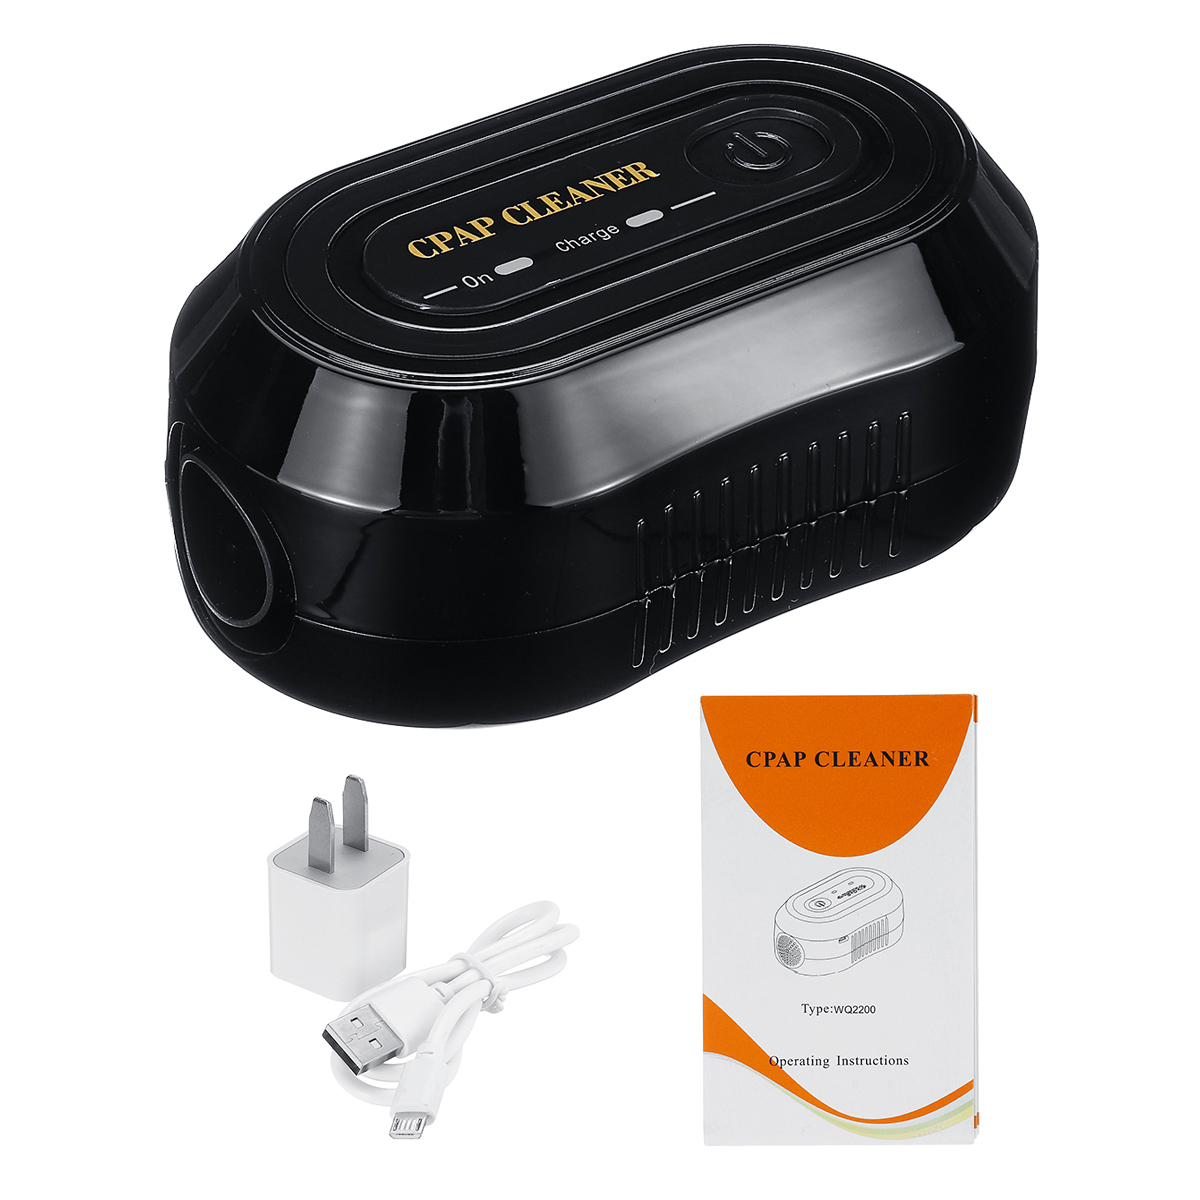 

Mini Portable CPAP Cleaner Ozone Sterilizer Air Purifier